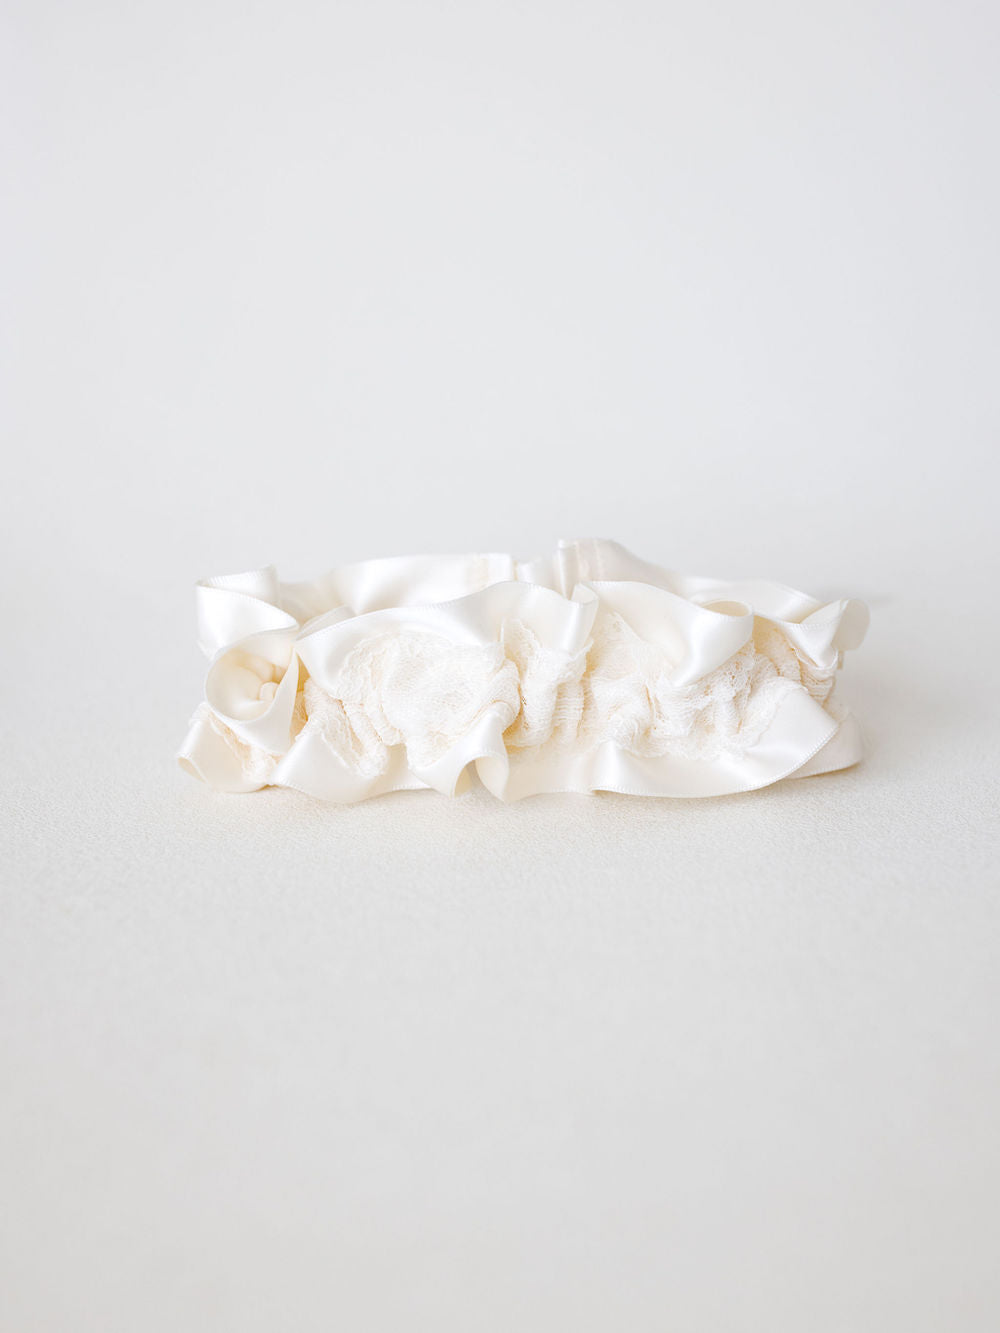 handmade adjustable ivory lace wedding garter created by The Garter Girl